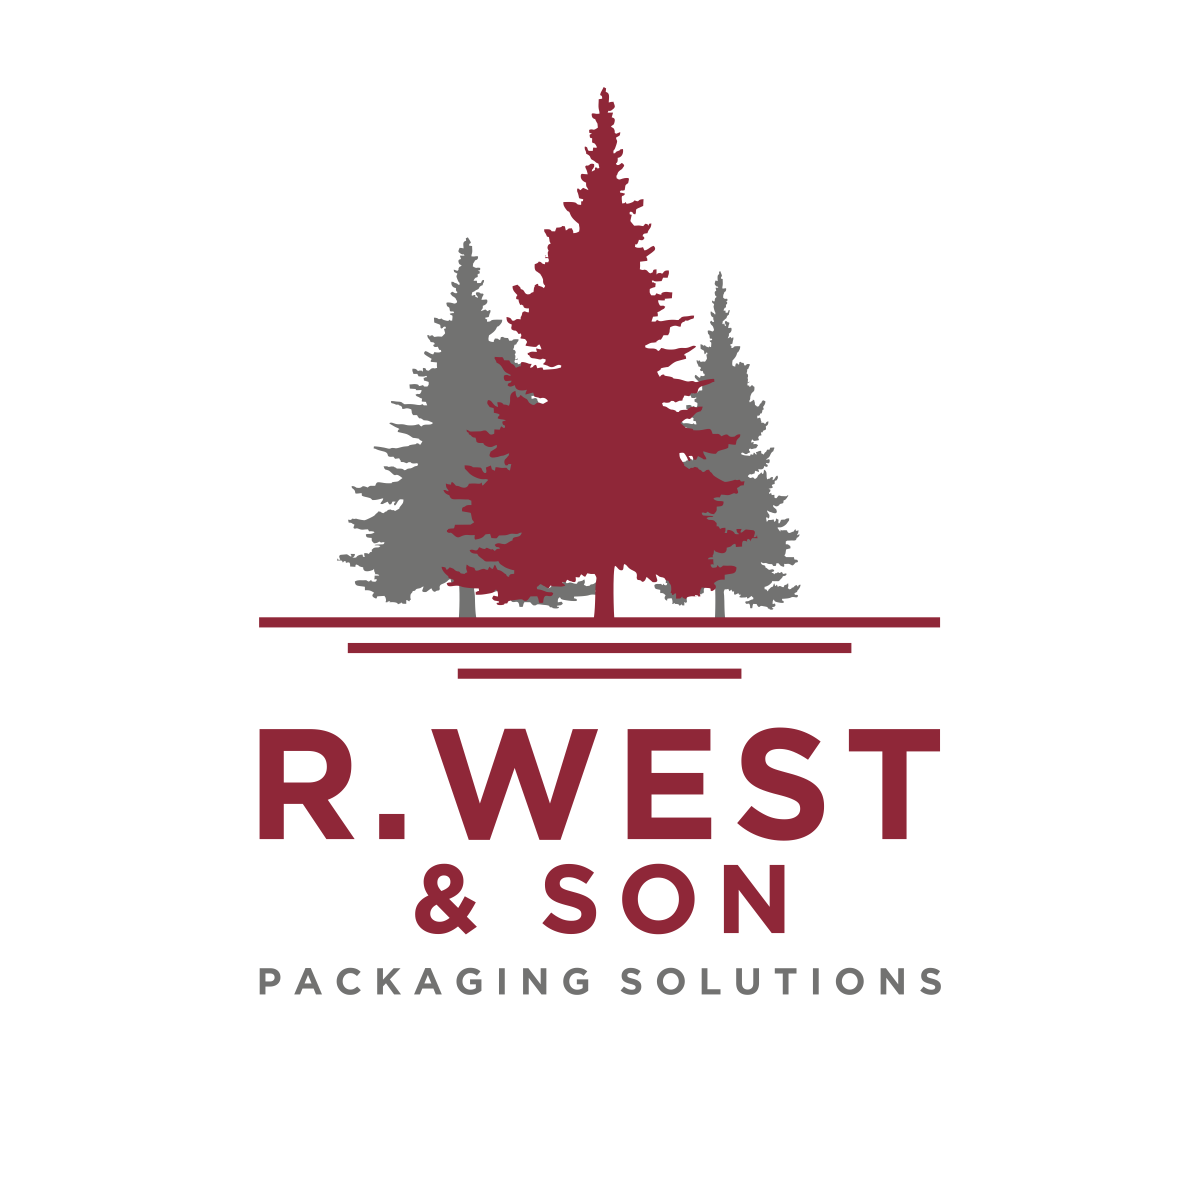 R.West & Son